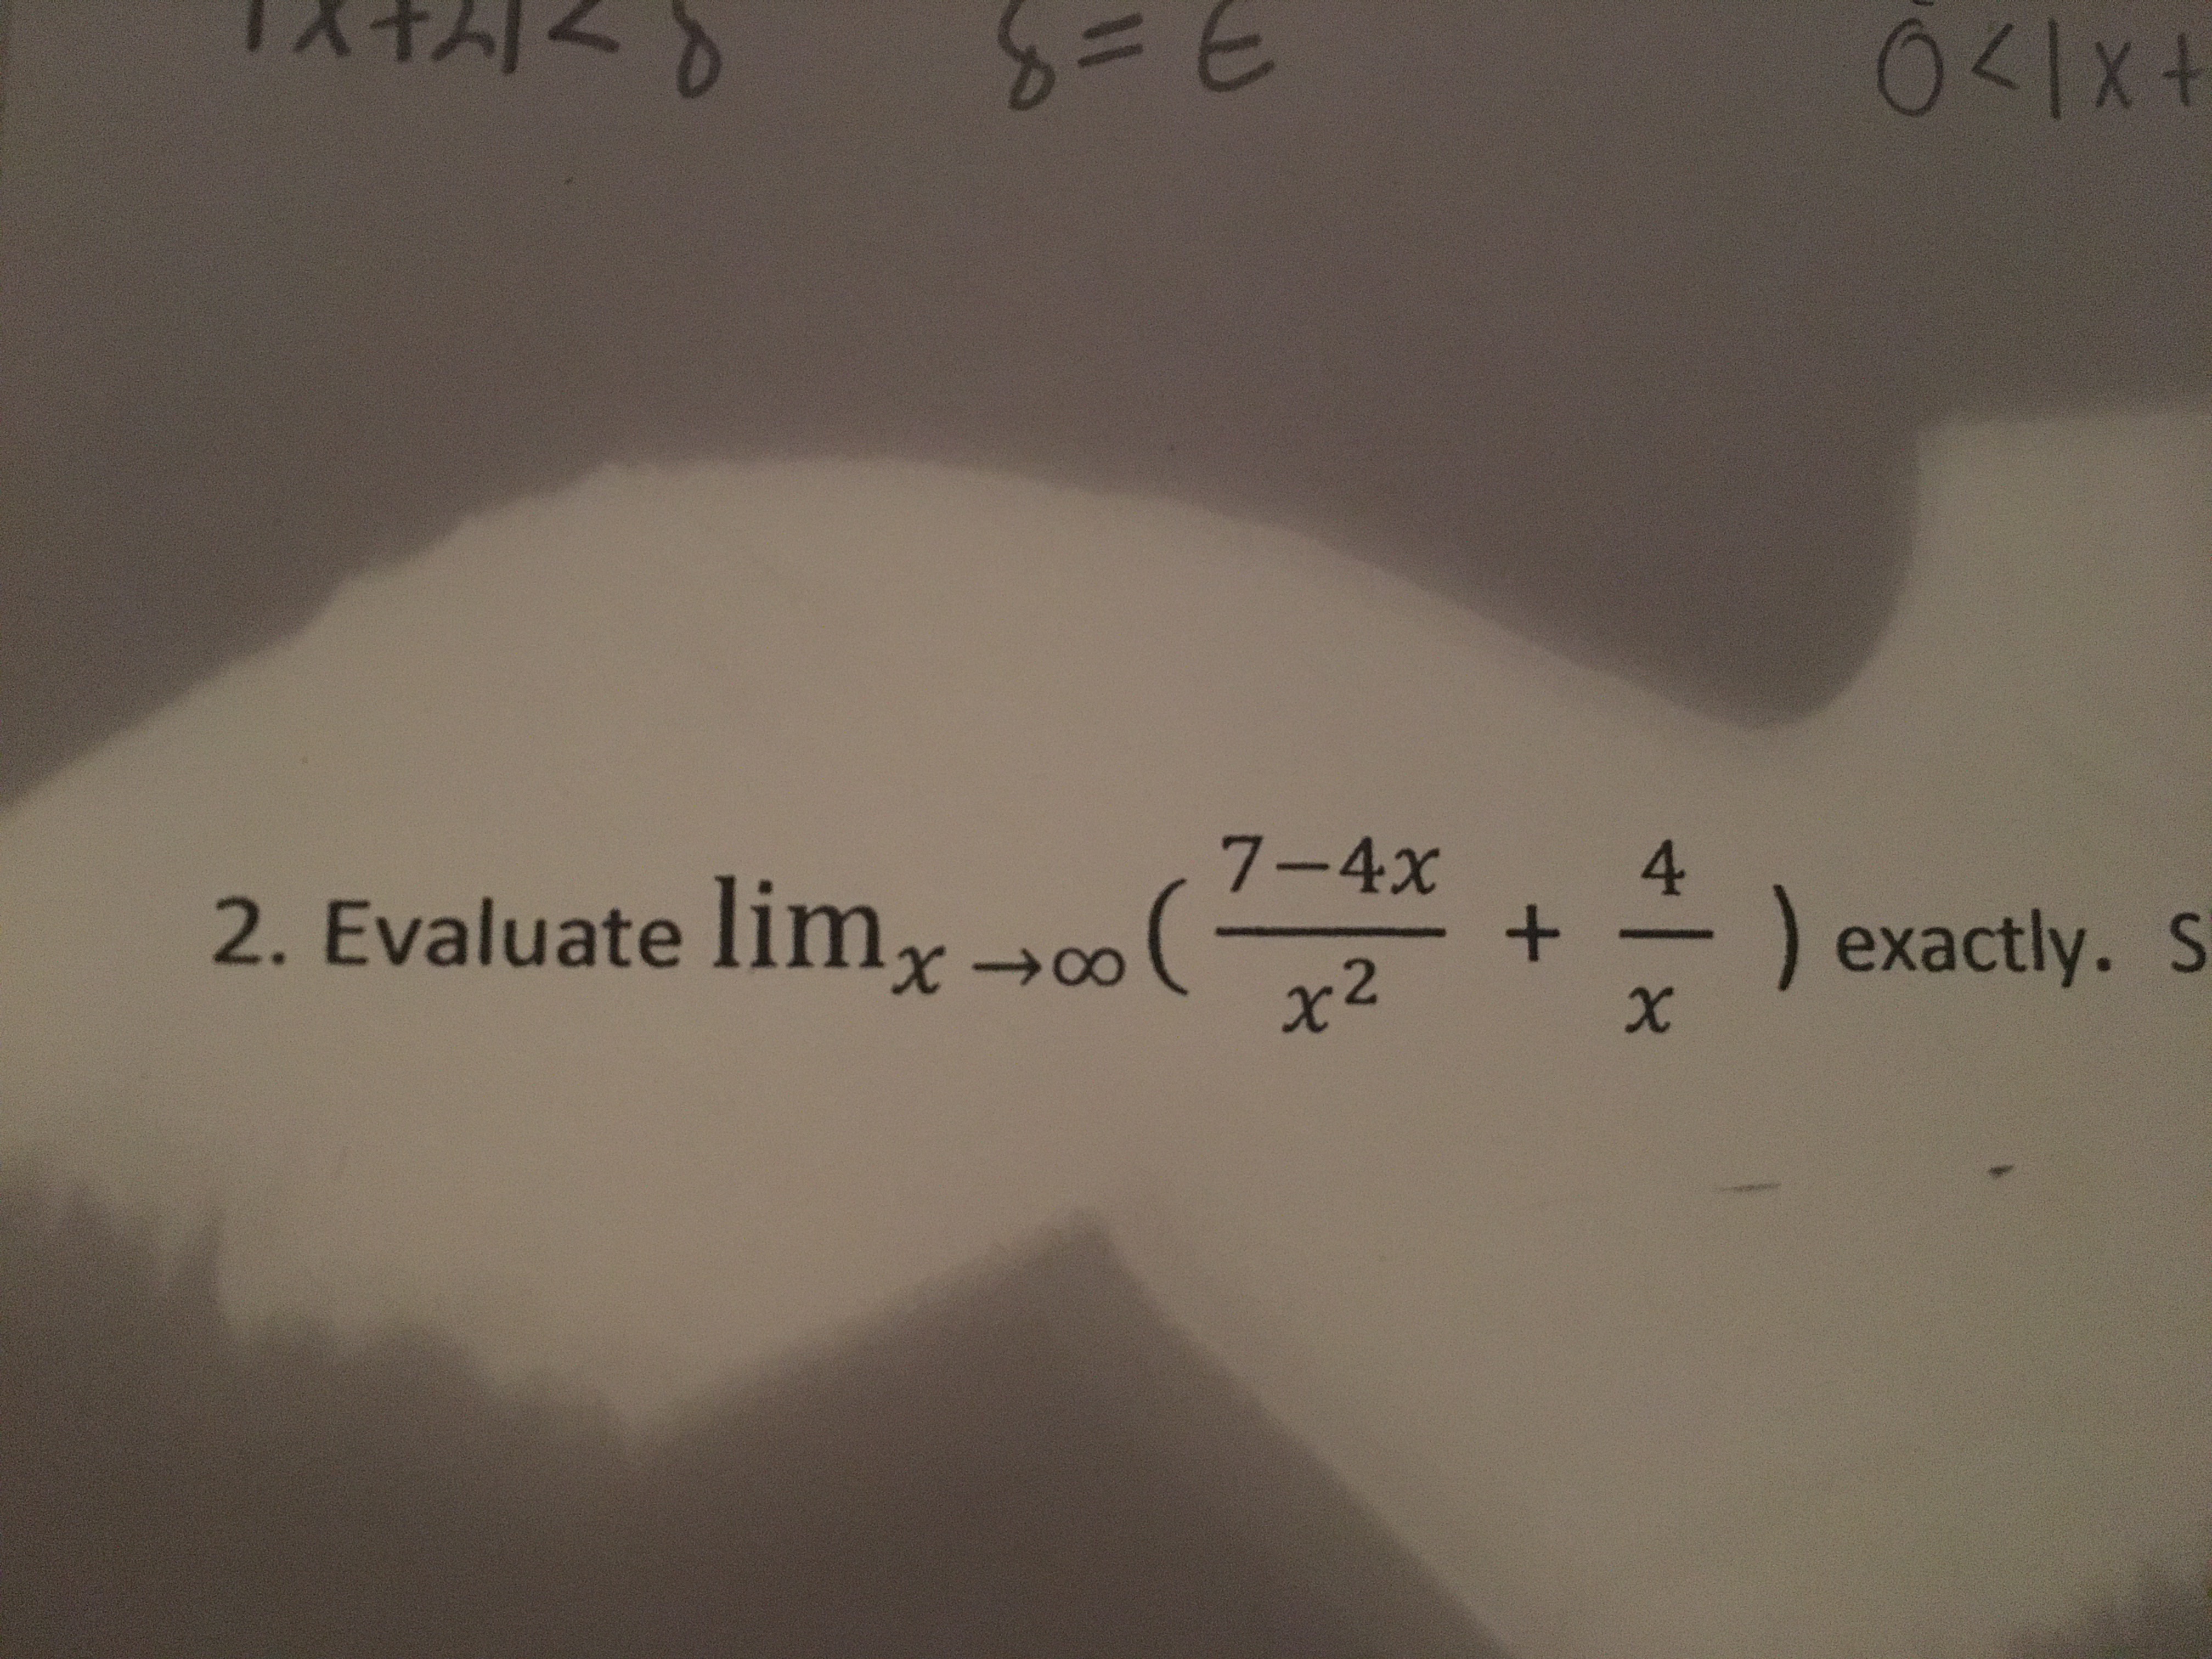 1x+
7=3
7-4x
2. Evaluate lim,→∞(
x2
4.
) exactly. S
